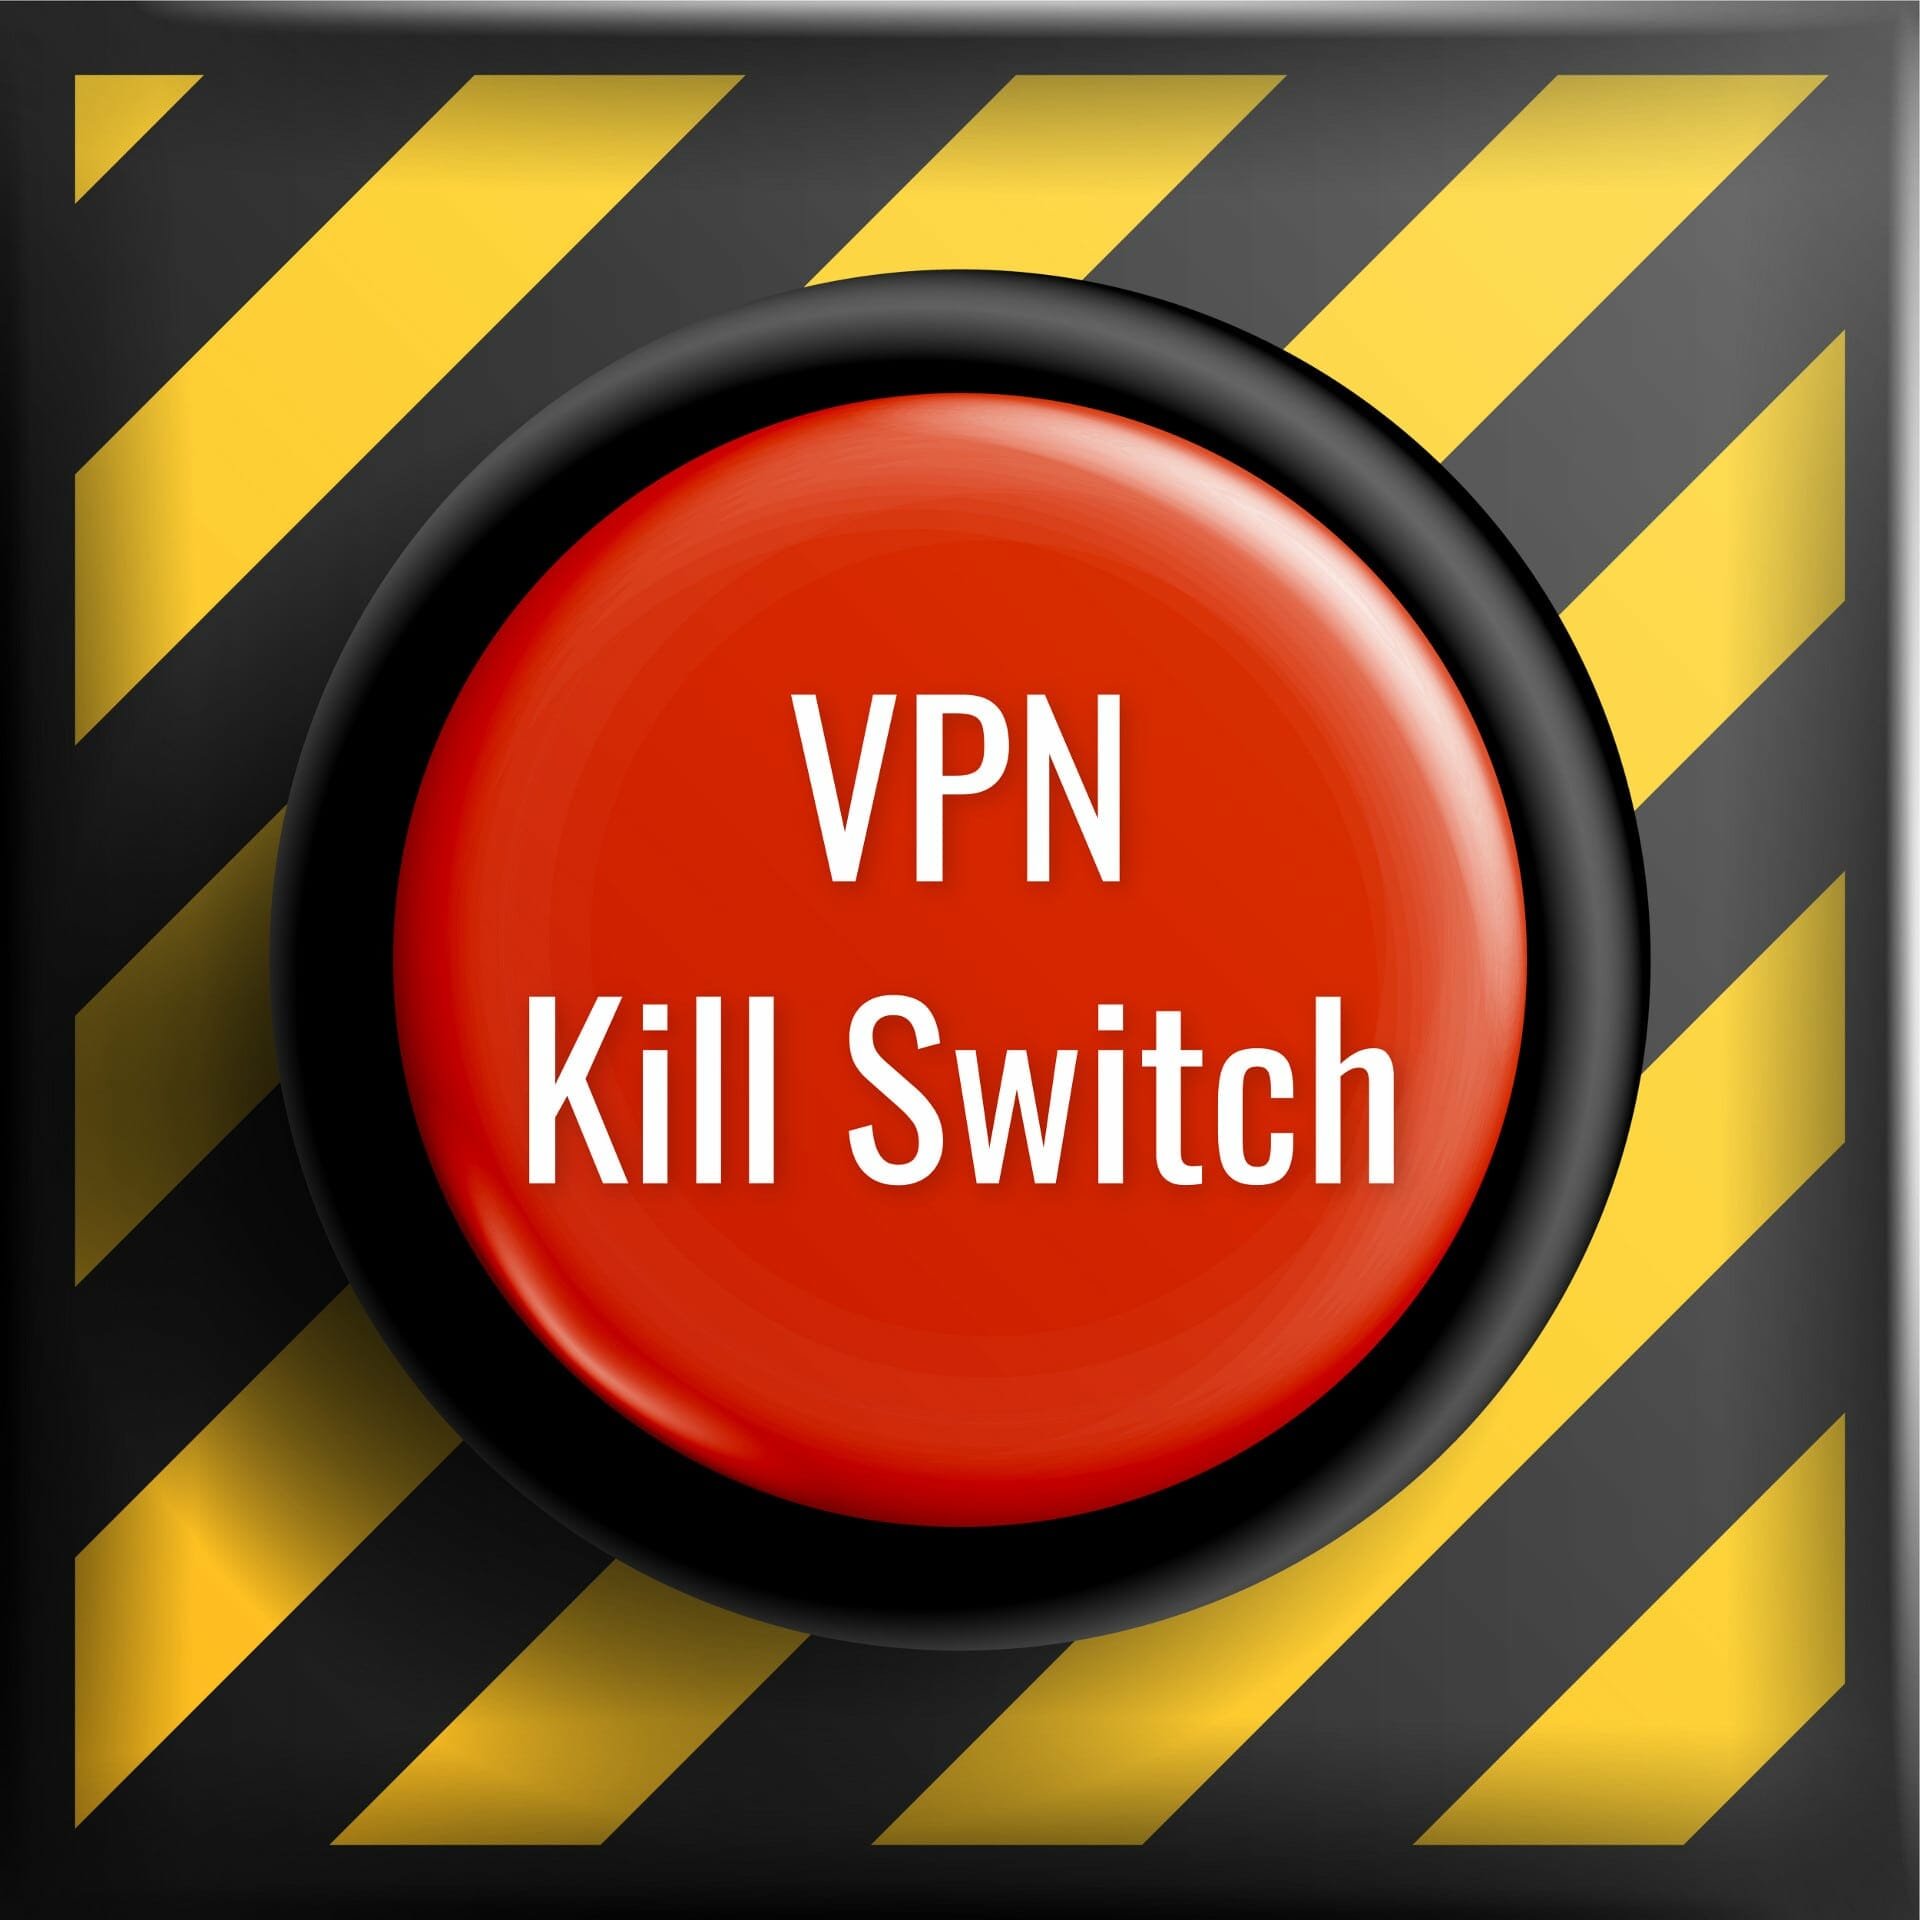 use VPN kill switch for Windows